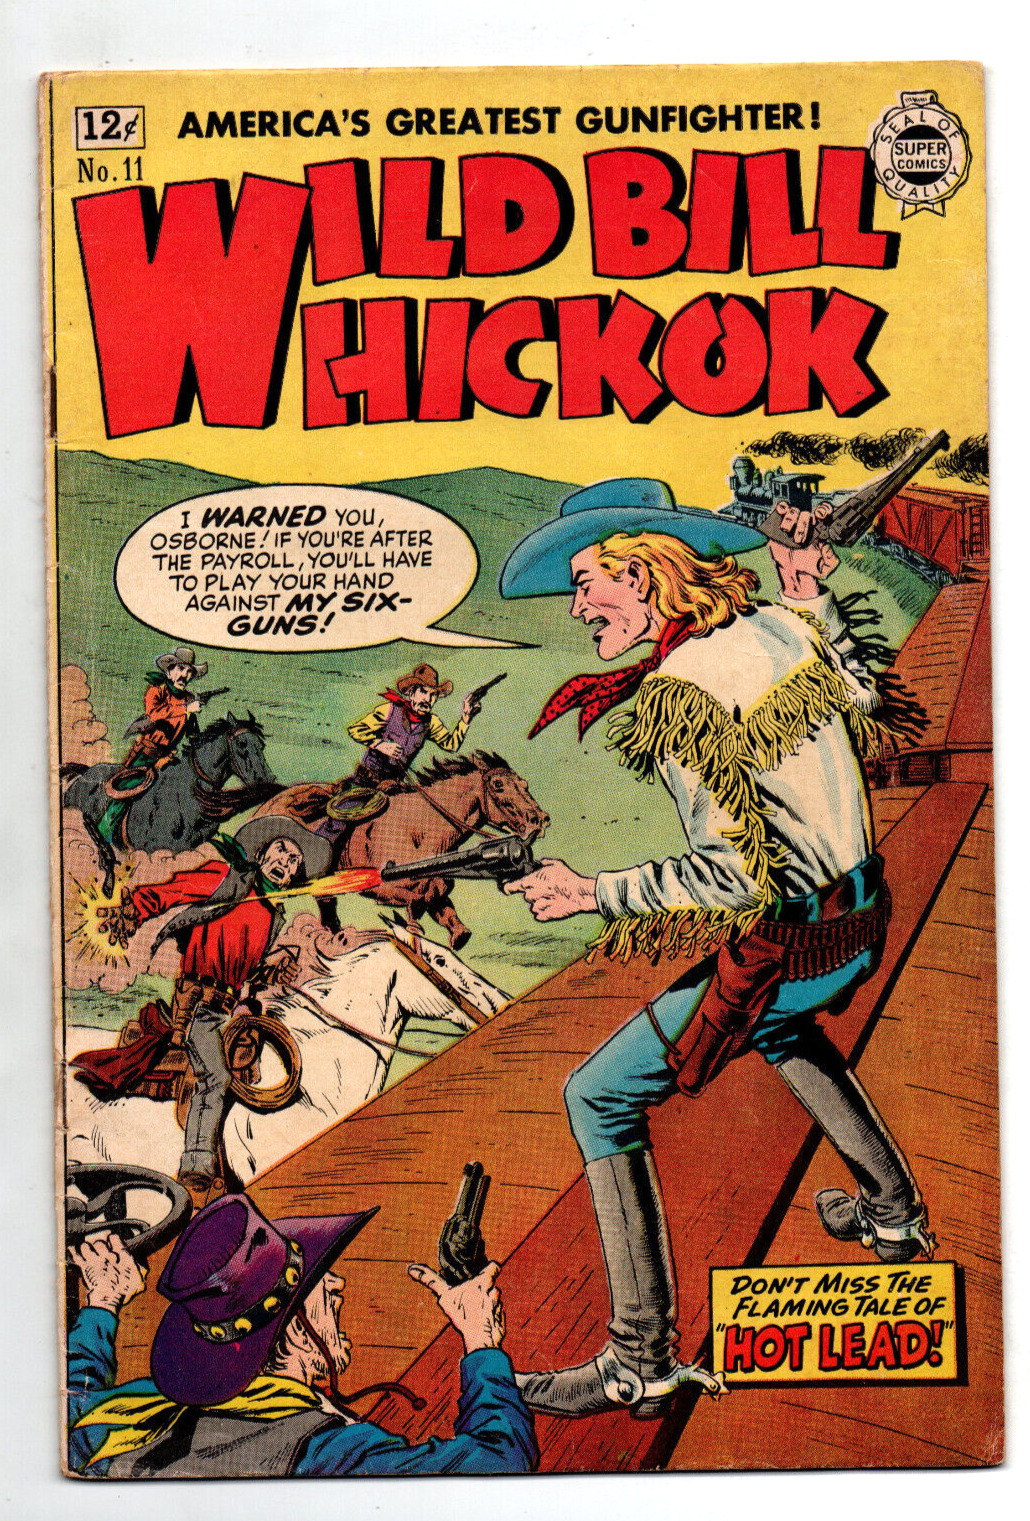 Wild Bill Hickok #11 - western - Super Comics - 1963 - VG